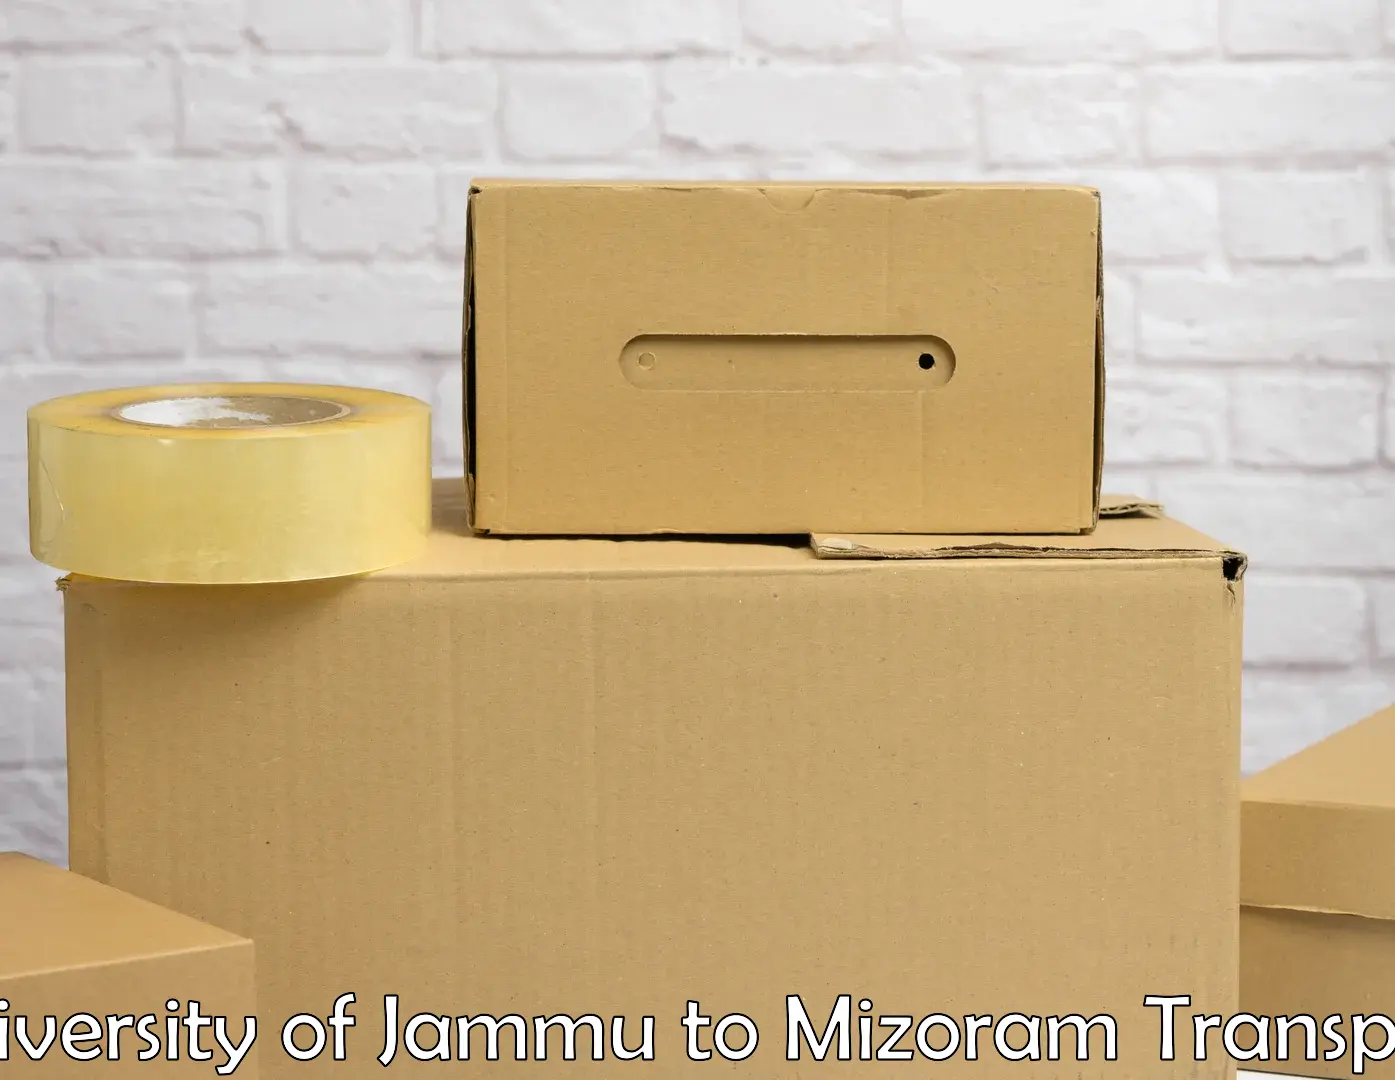 Sending bike to another city University of Jammu to Khawzawl